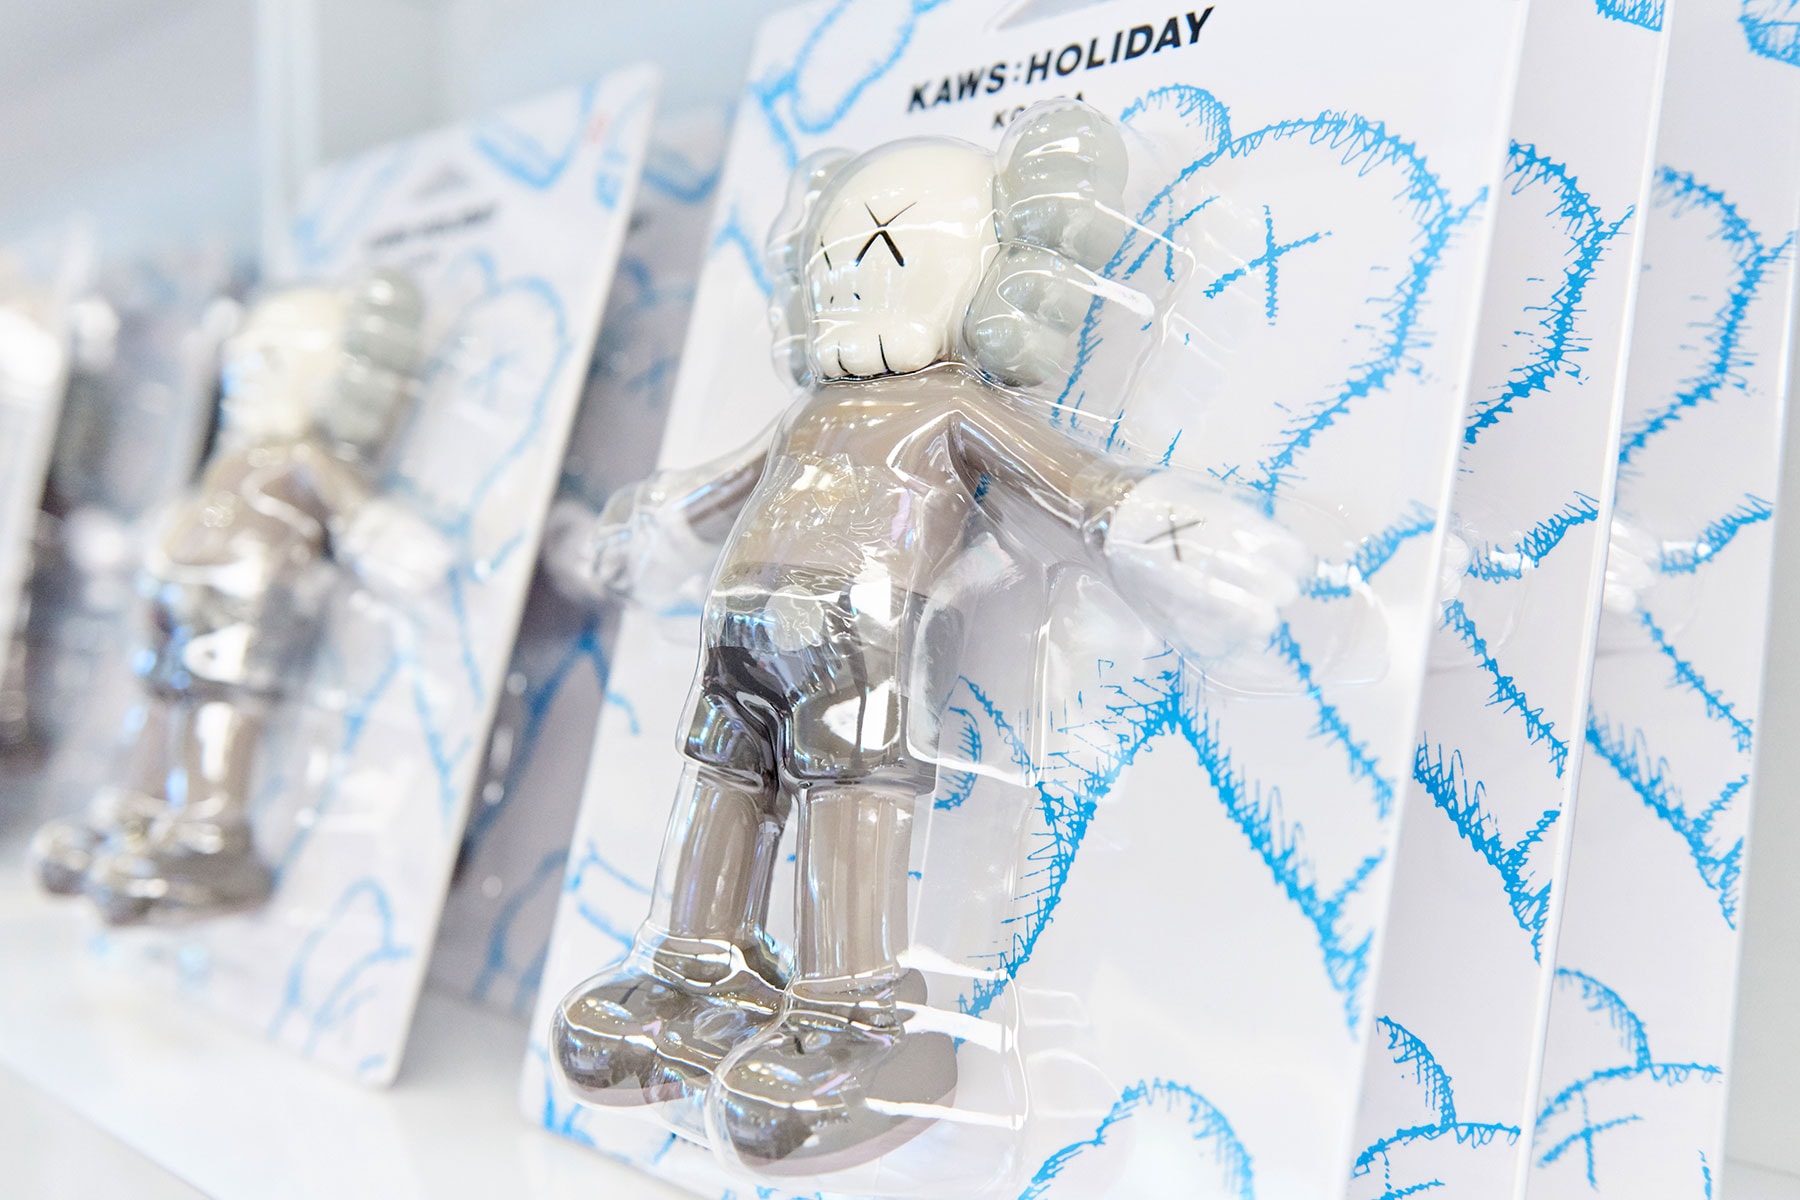 KAWS Holiday Allrightsreserved Lotte Seoul Korea Seokchon Lake Toy Towel Merch Pop Up